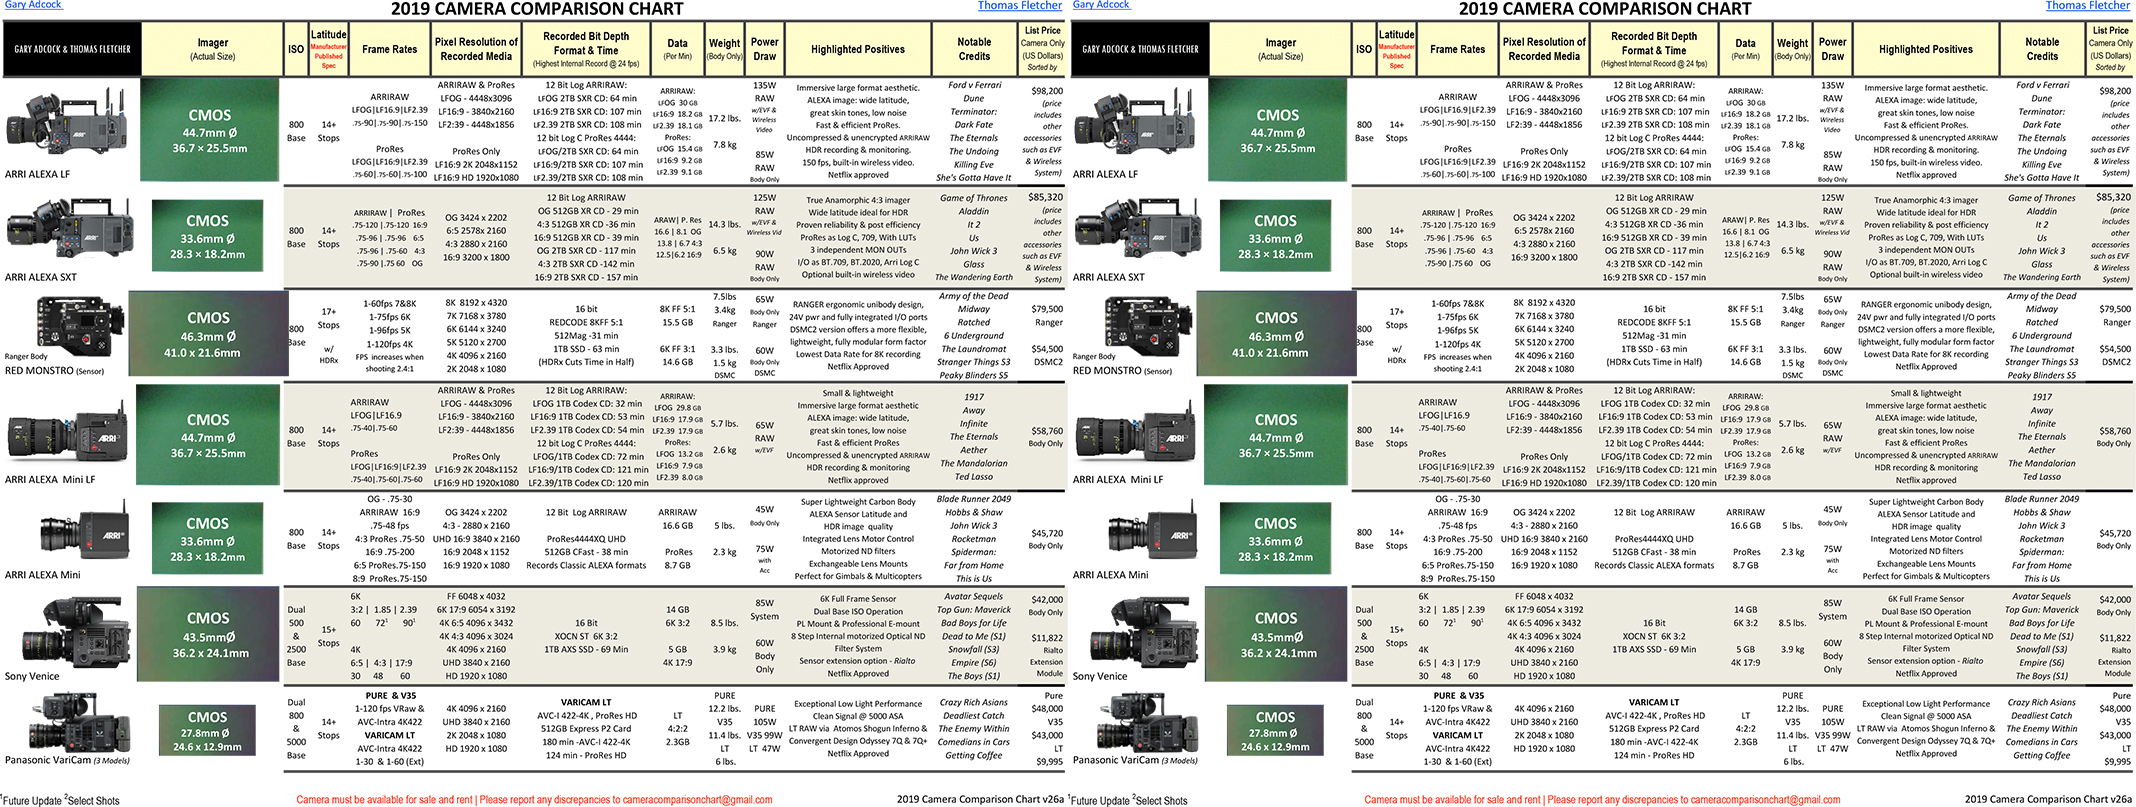 Fletcher Camera Comparison Chart 2017